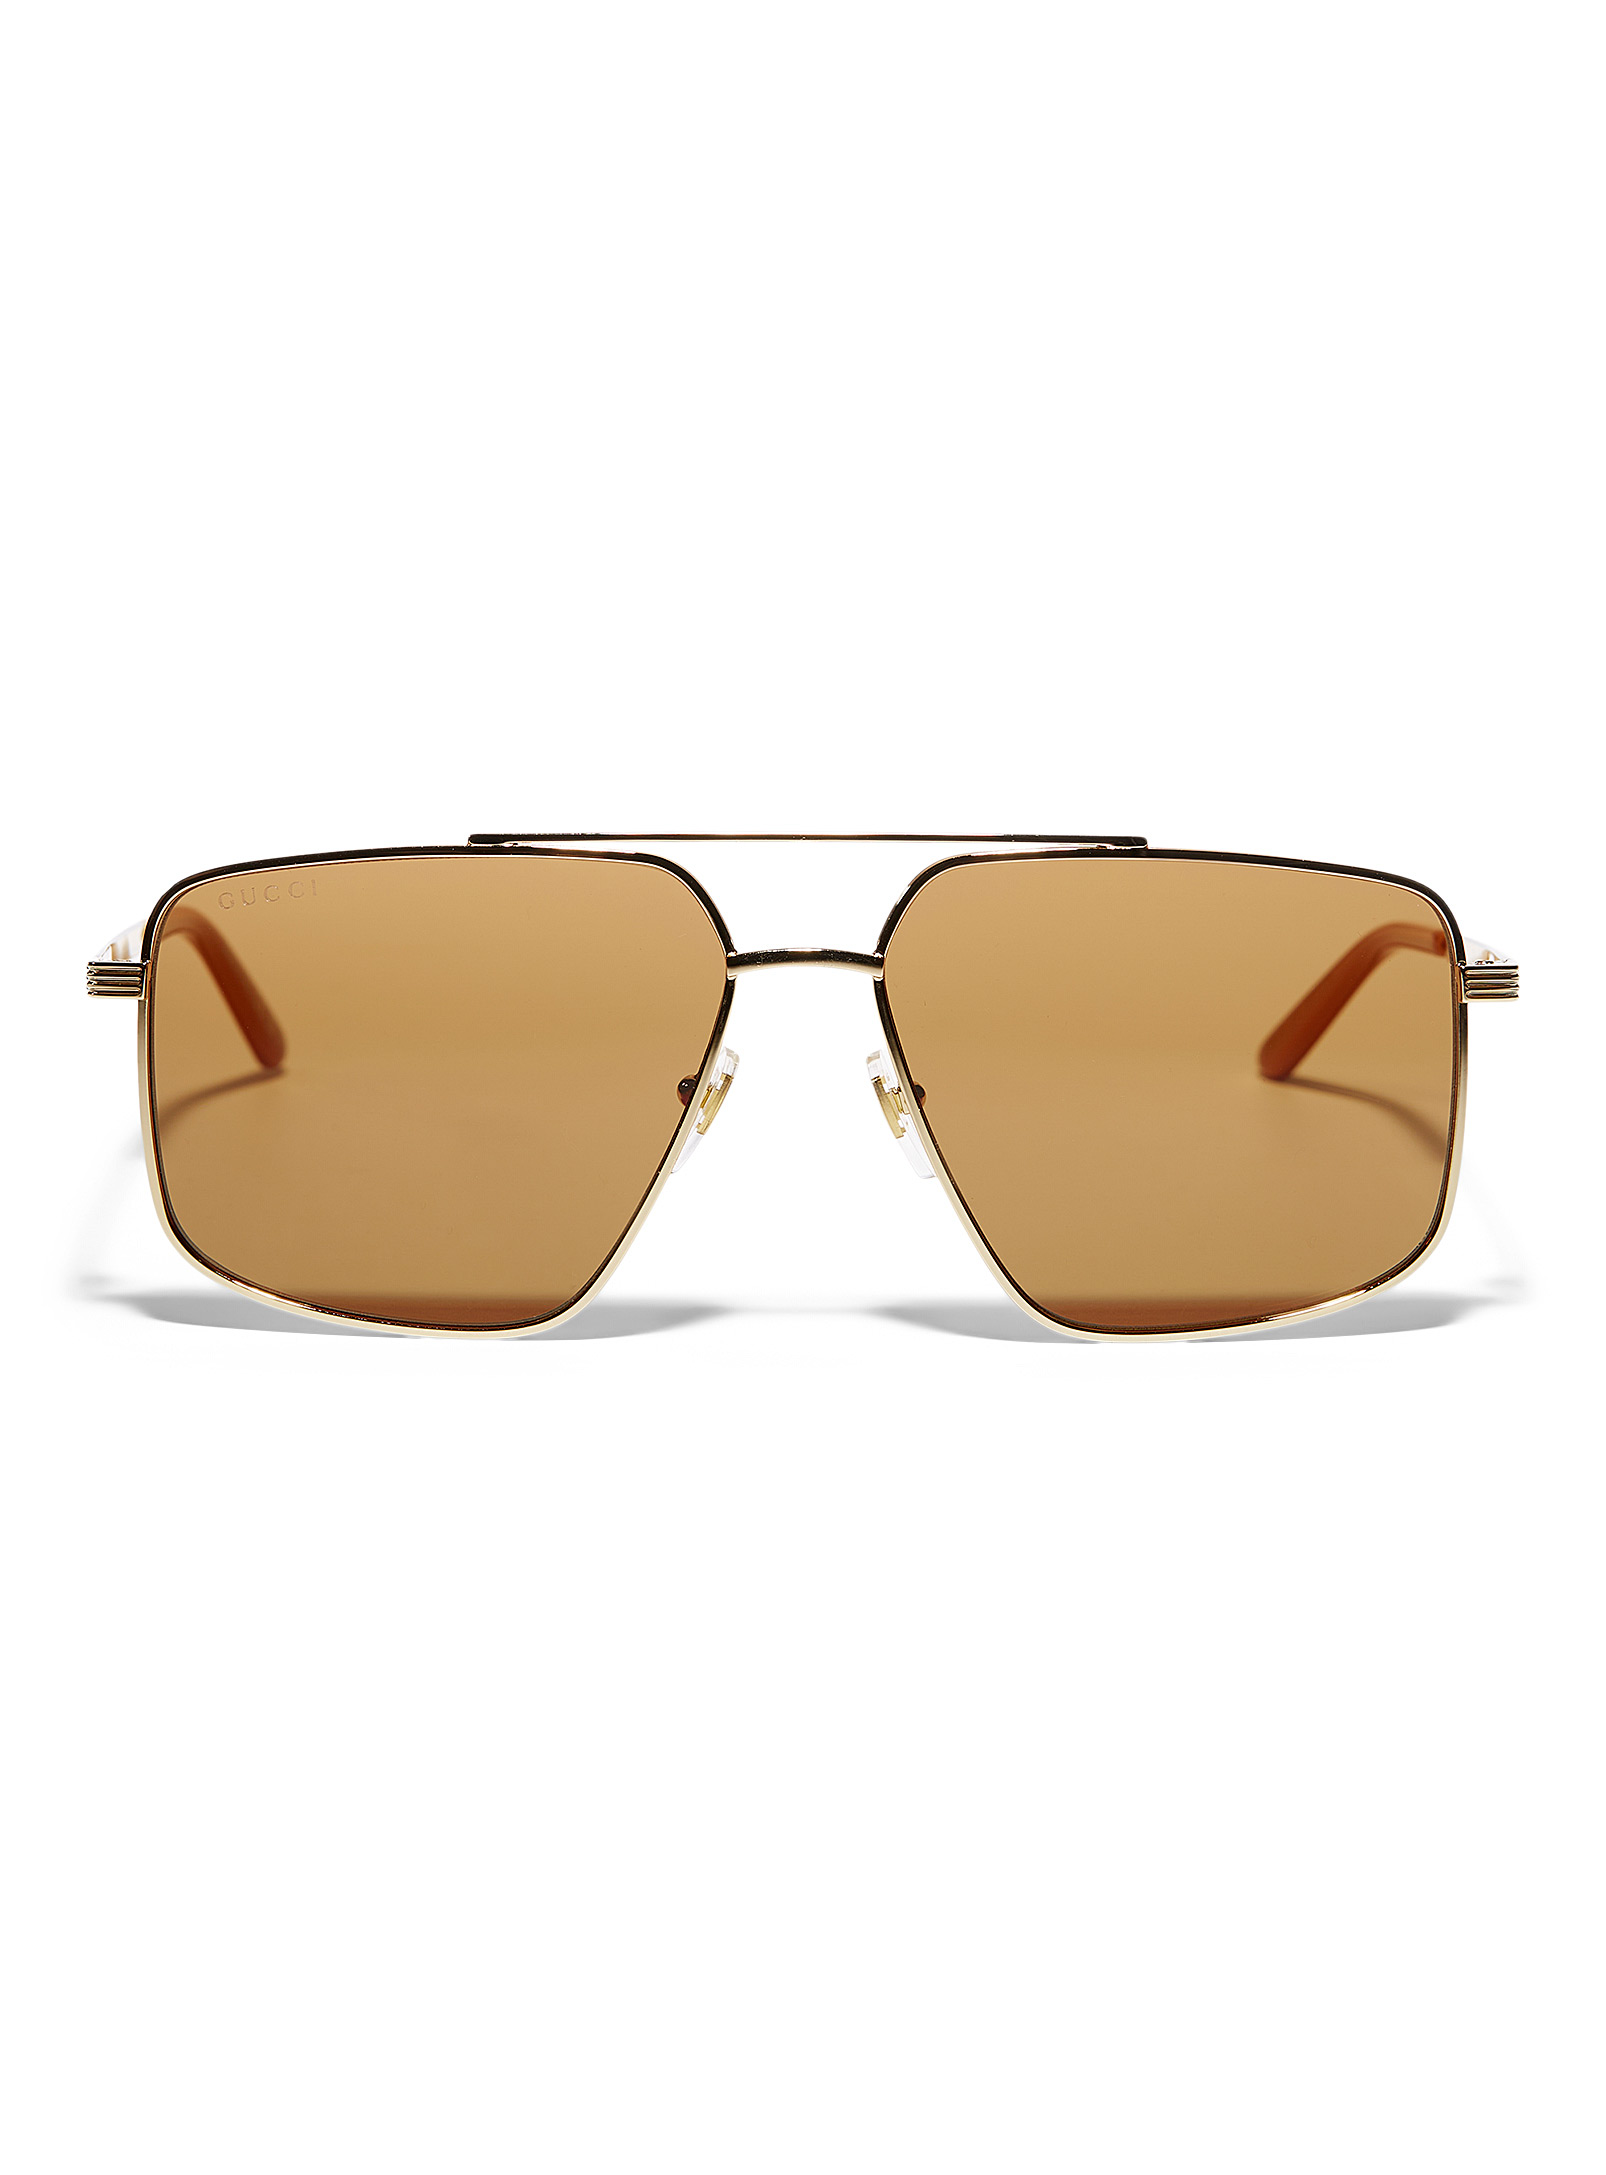 Gucci - Metallic gold geometric aviator sunglasses